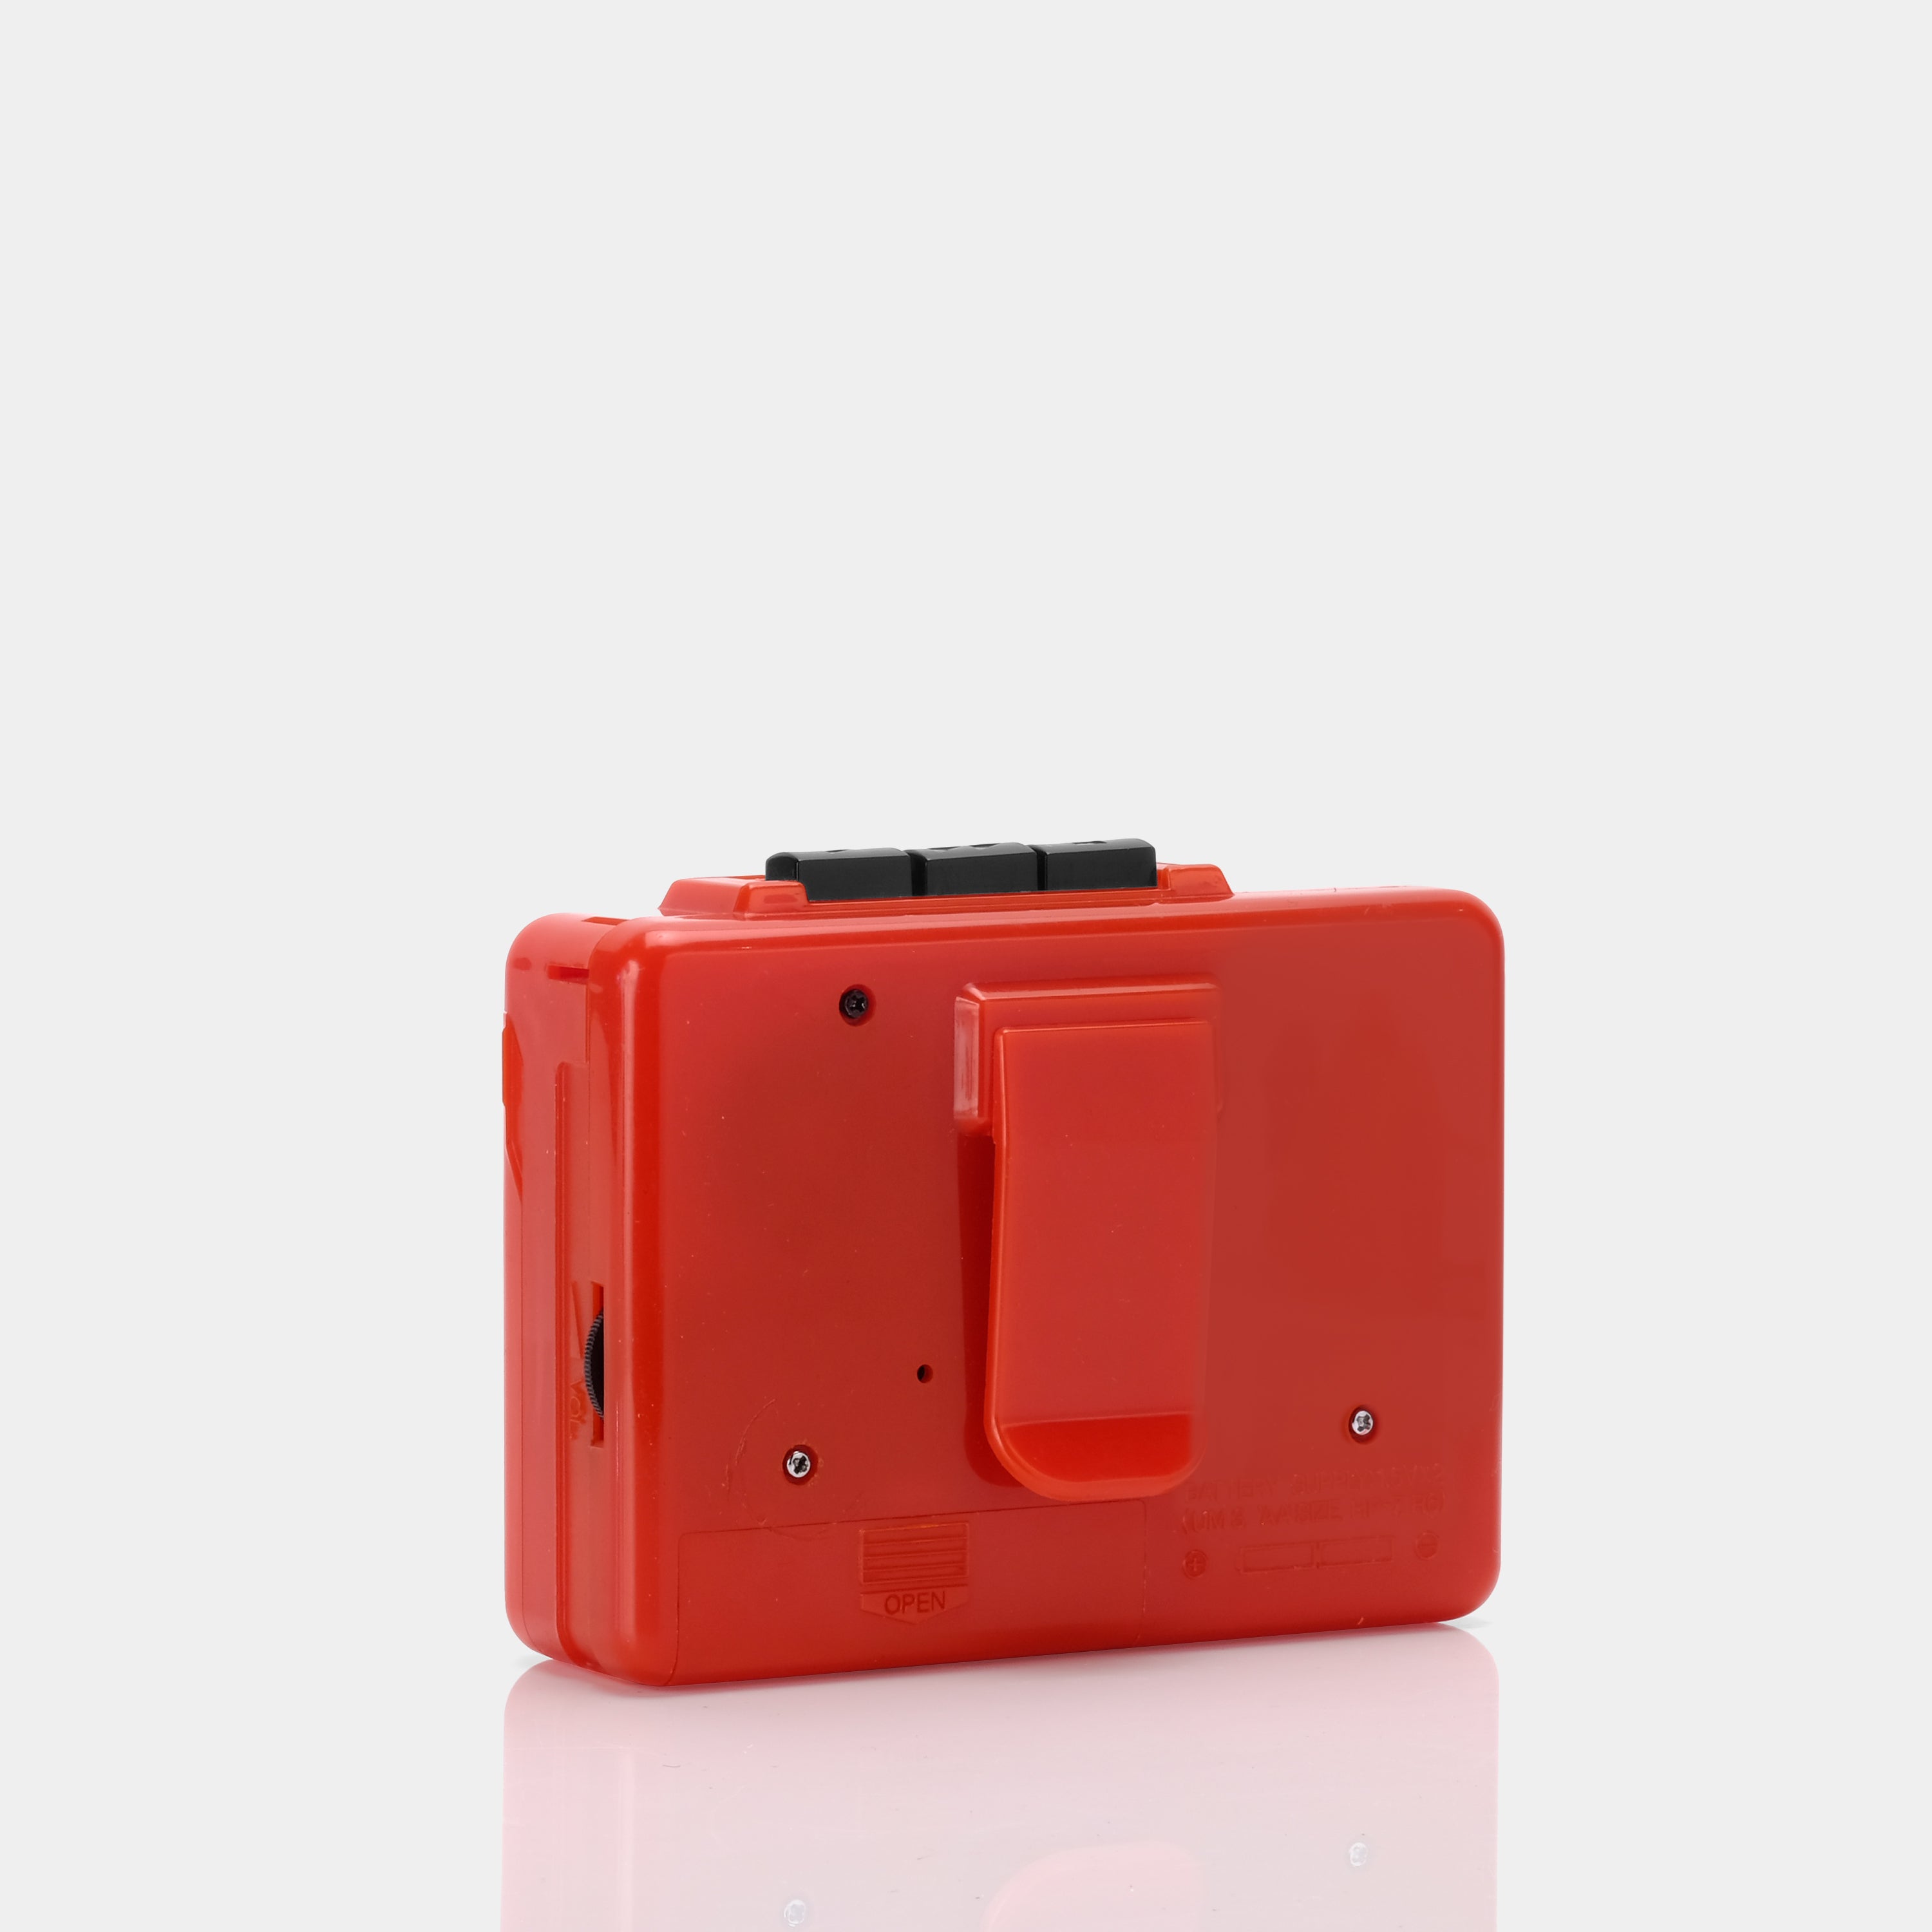 Stereo SL-863 Portable Cassette Player